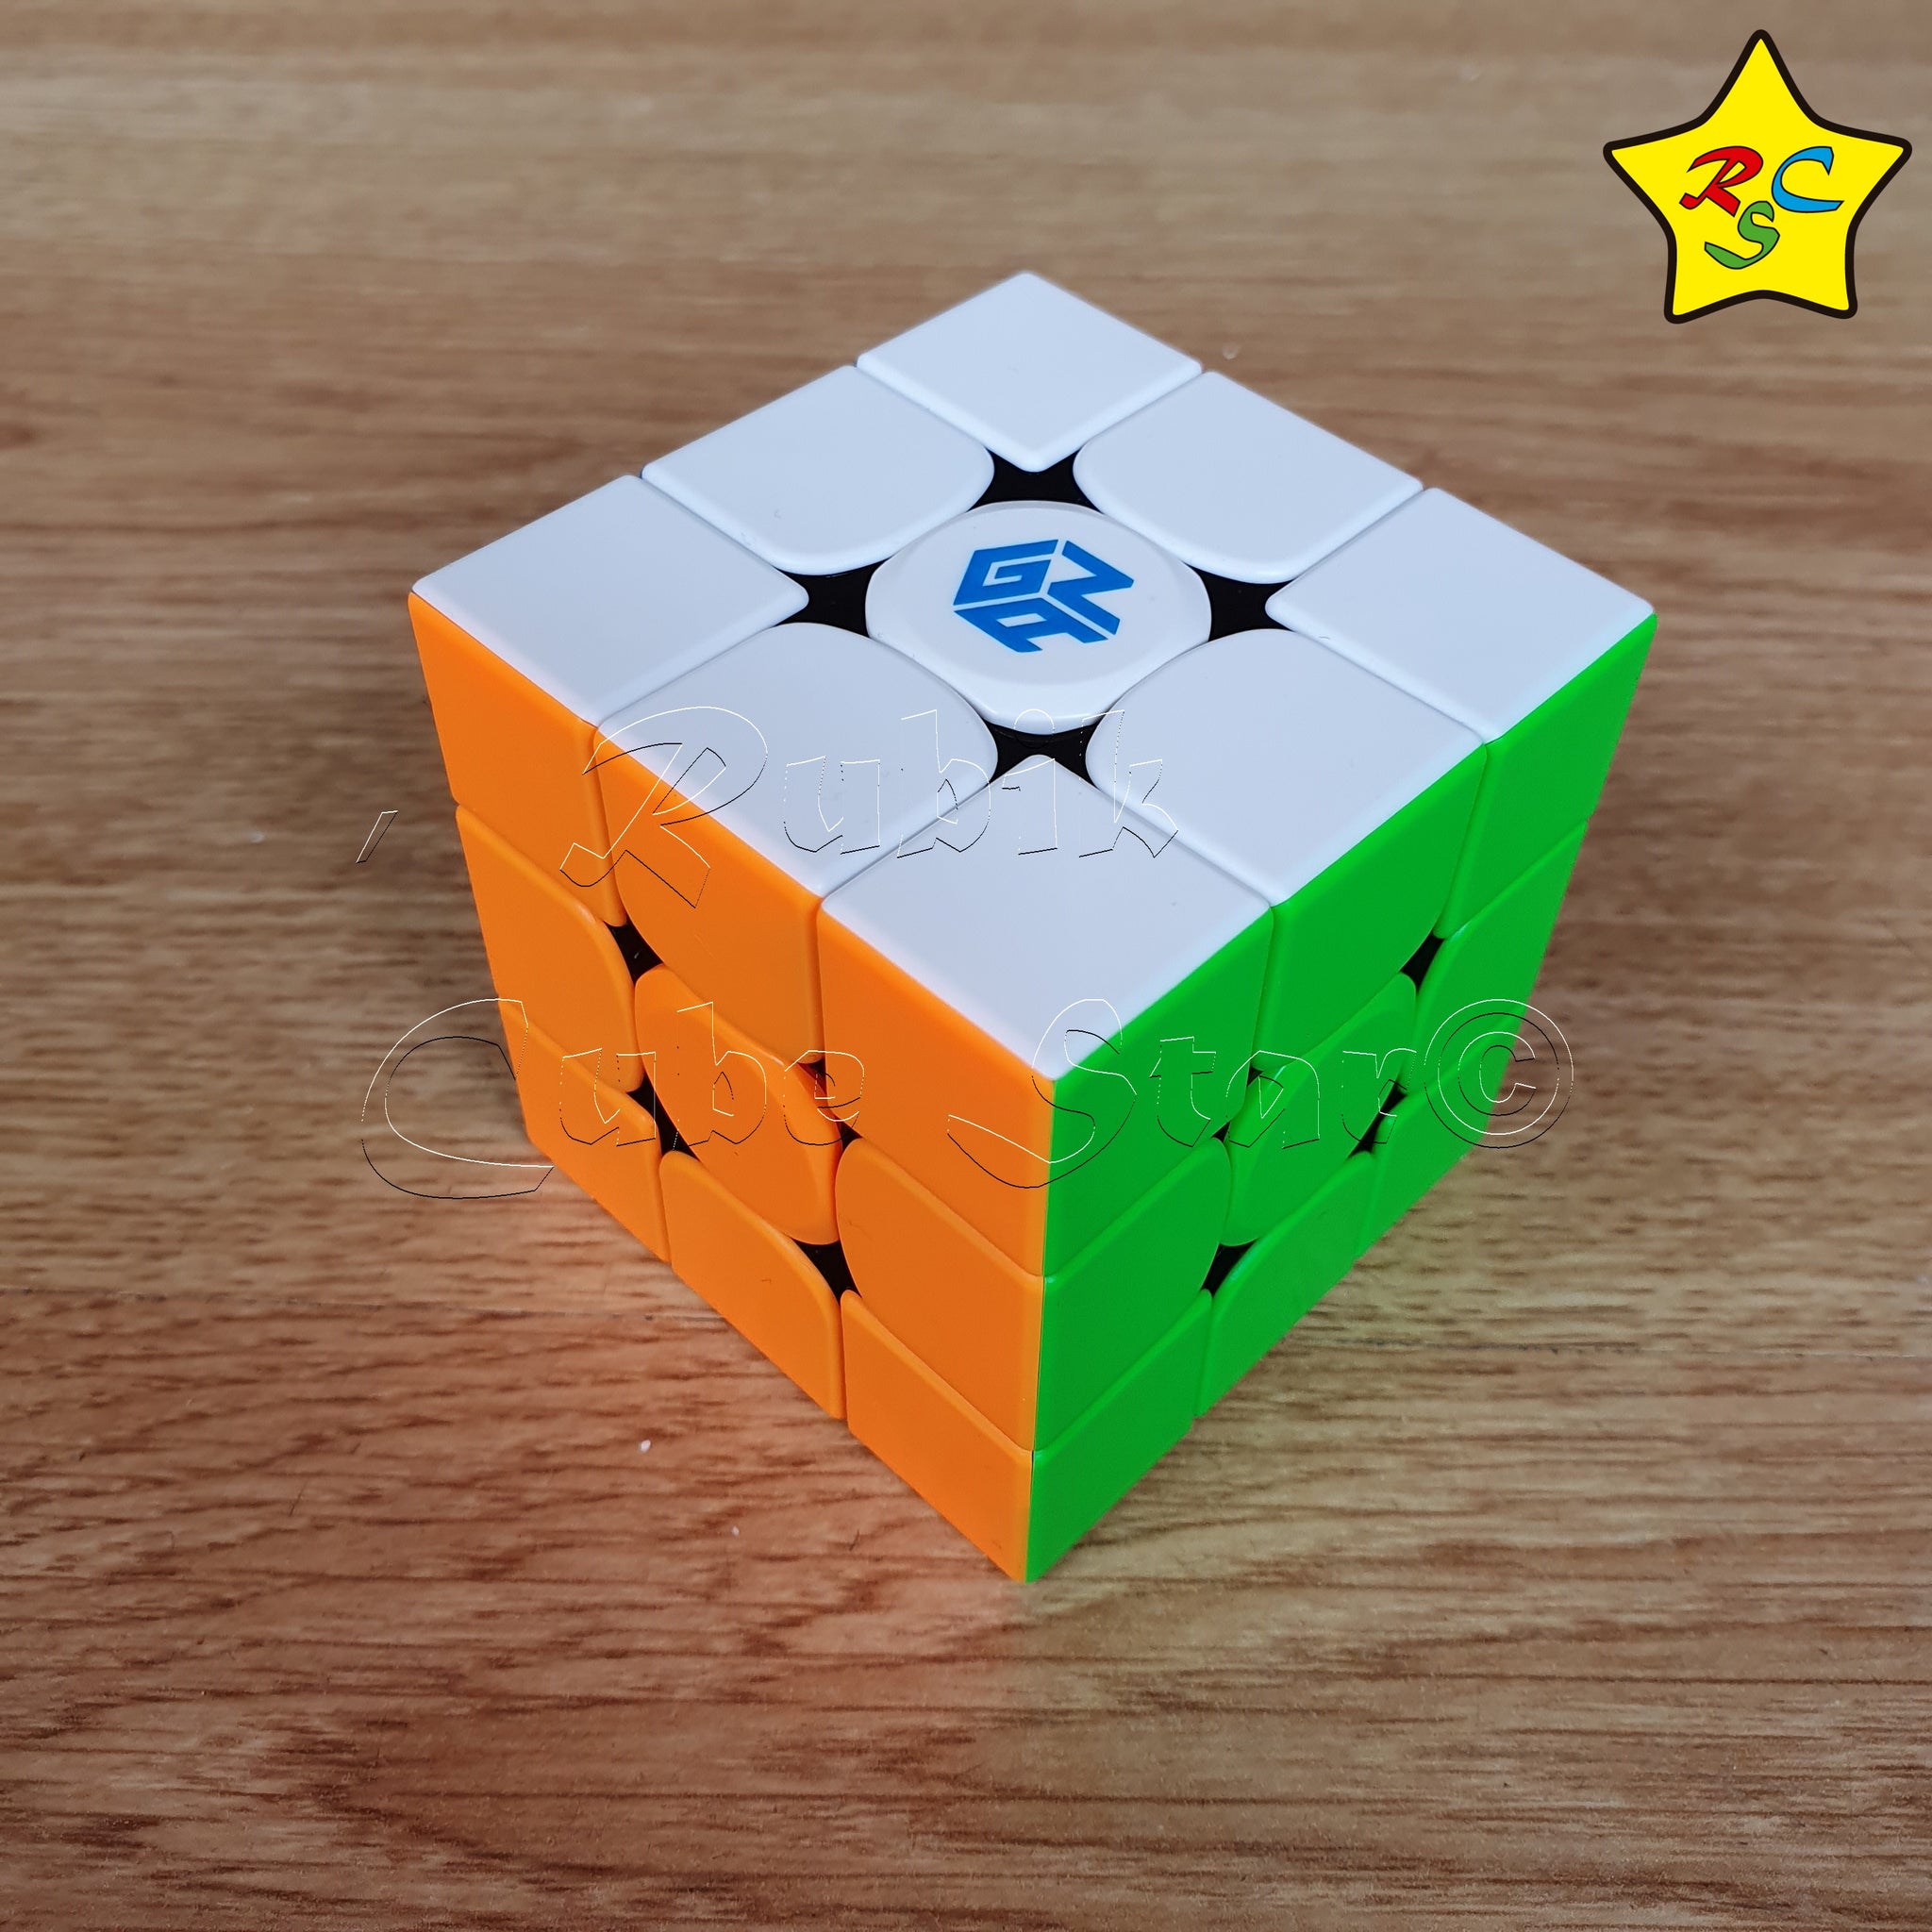 Rubik's cube gan 354 m v2 — nauticamilanonline